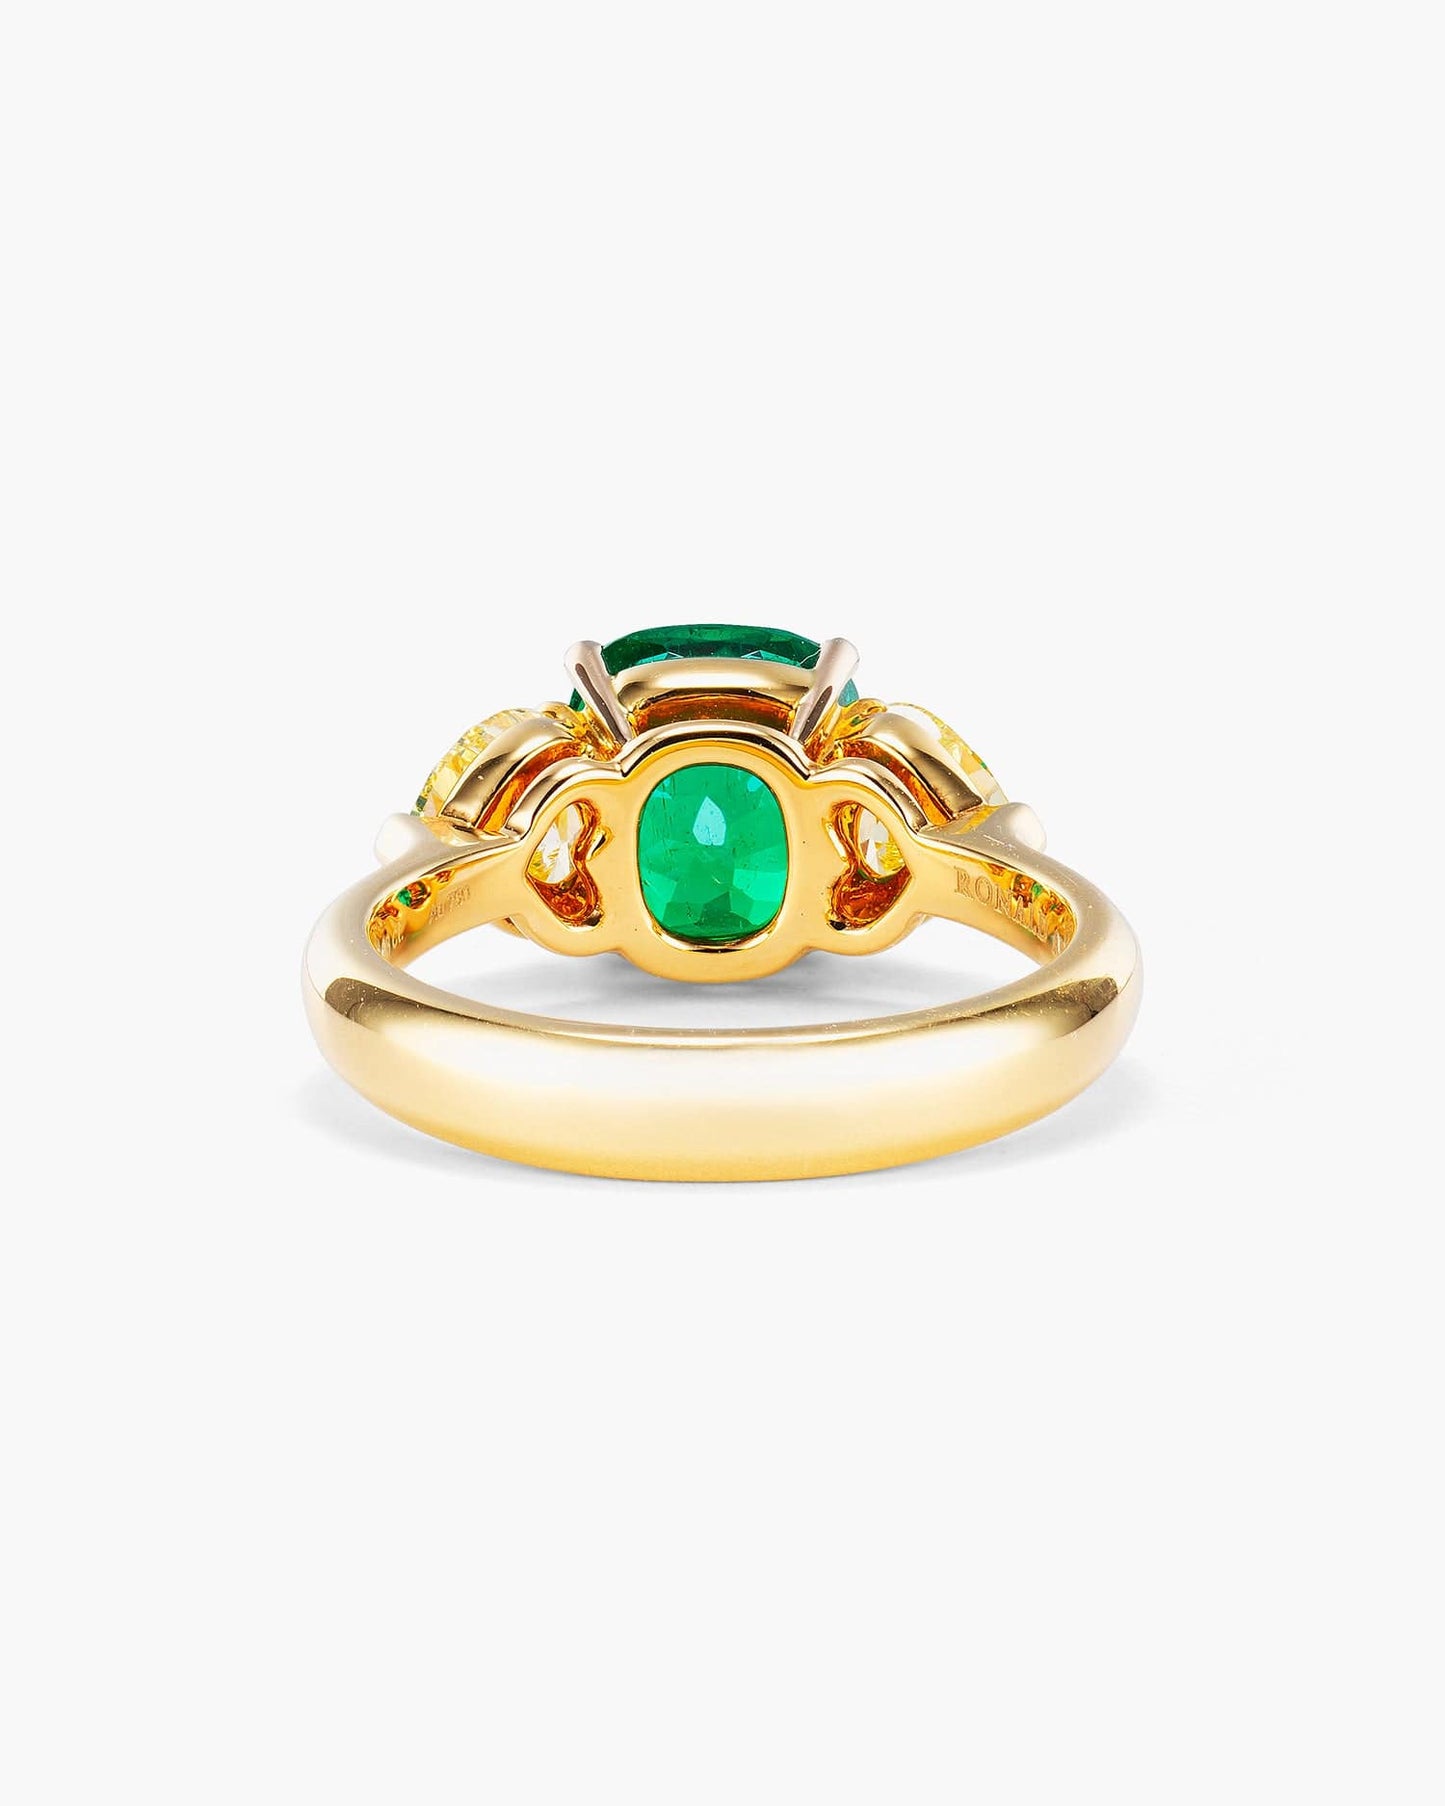 2.32 carat Cushion Cut Colombian Emerald and Yellow Diamond Ring